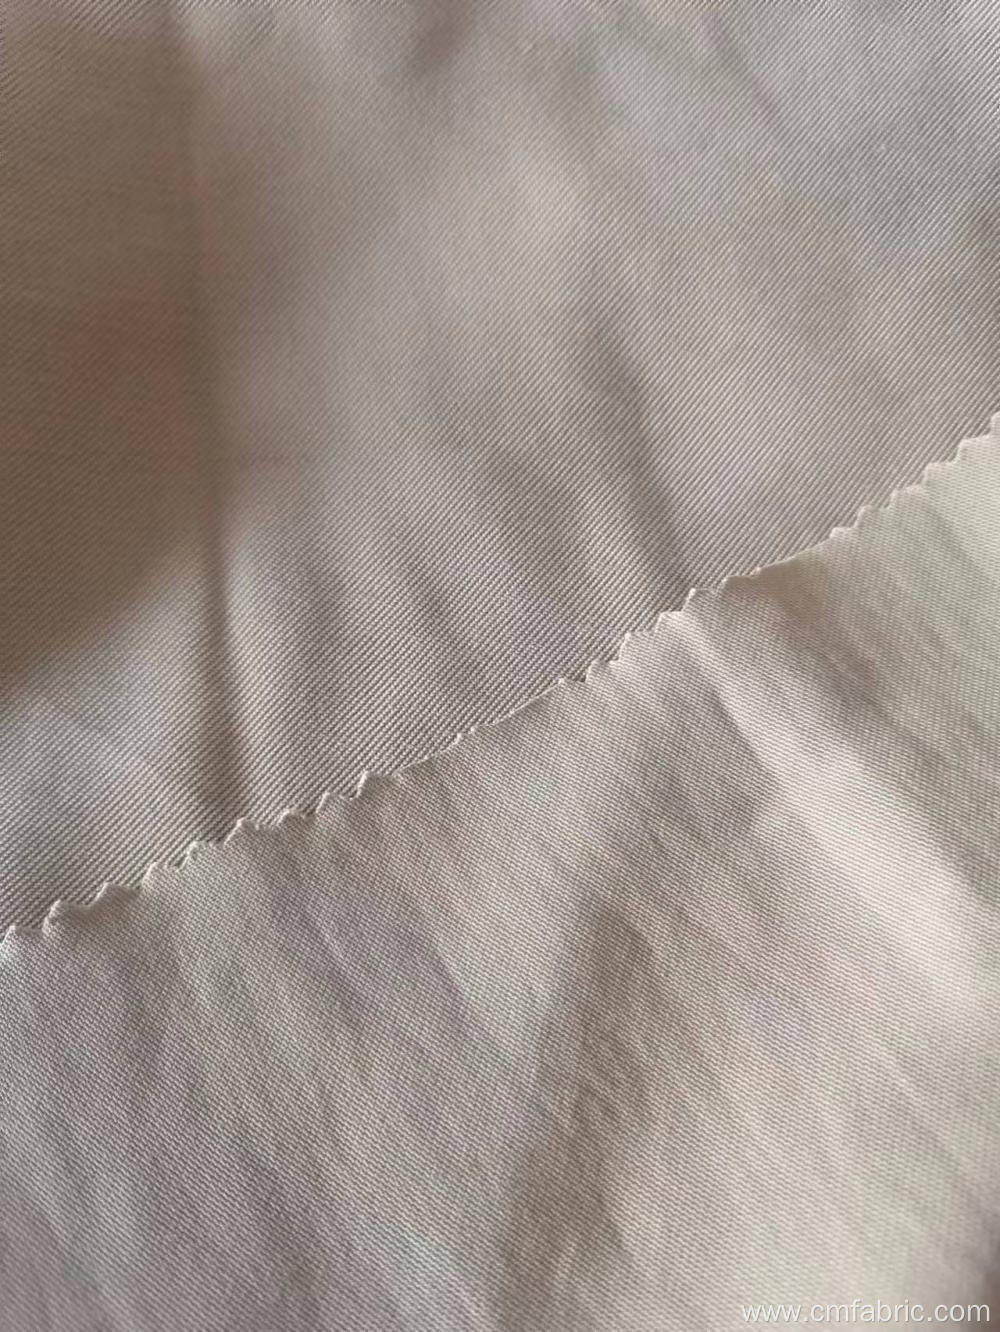 Woven Rayon Polyester twill Sandwashed Tencel like Fabric